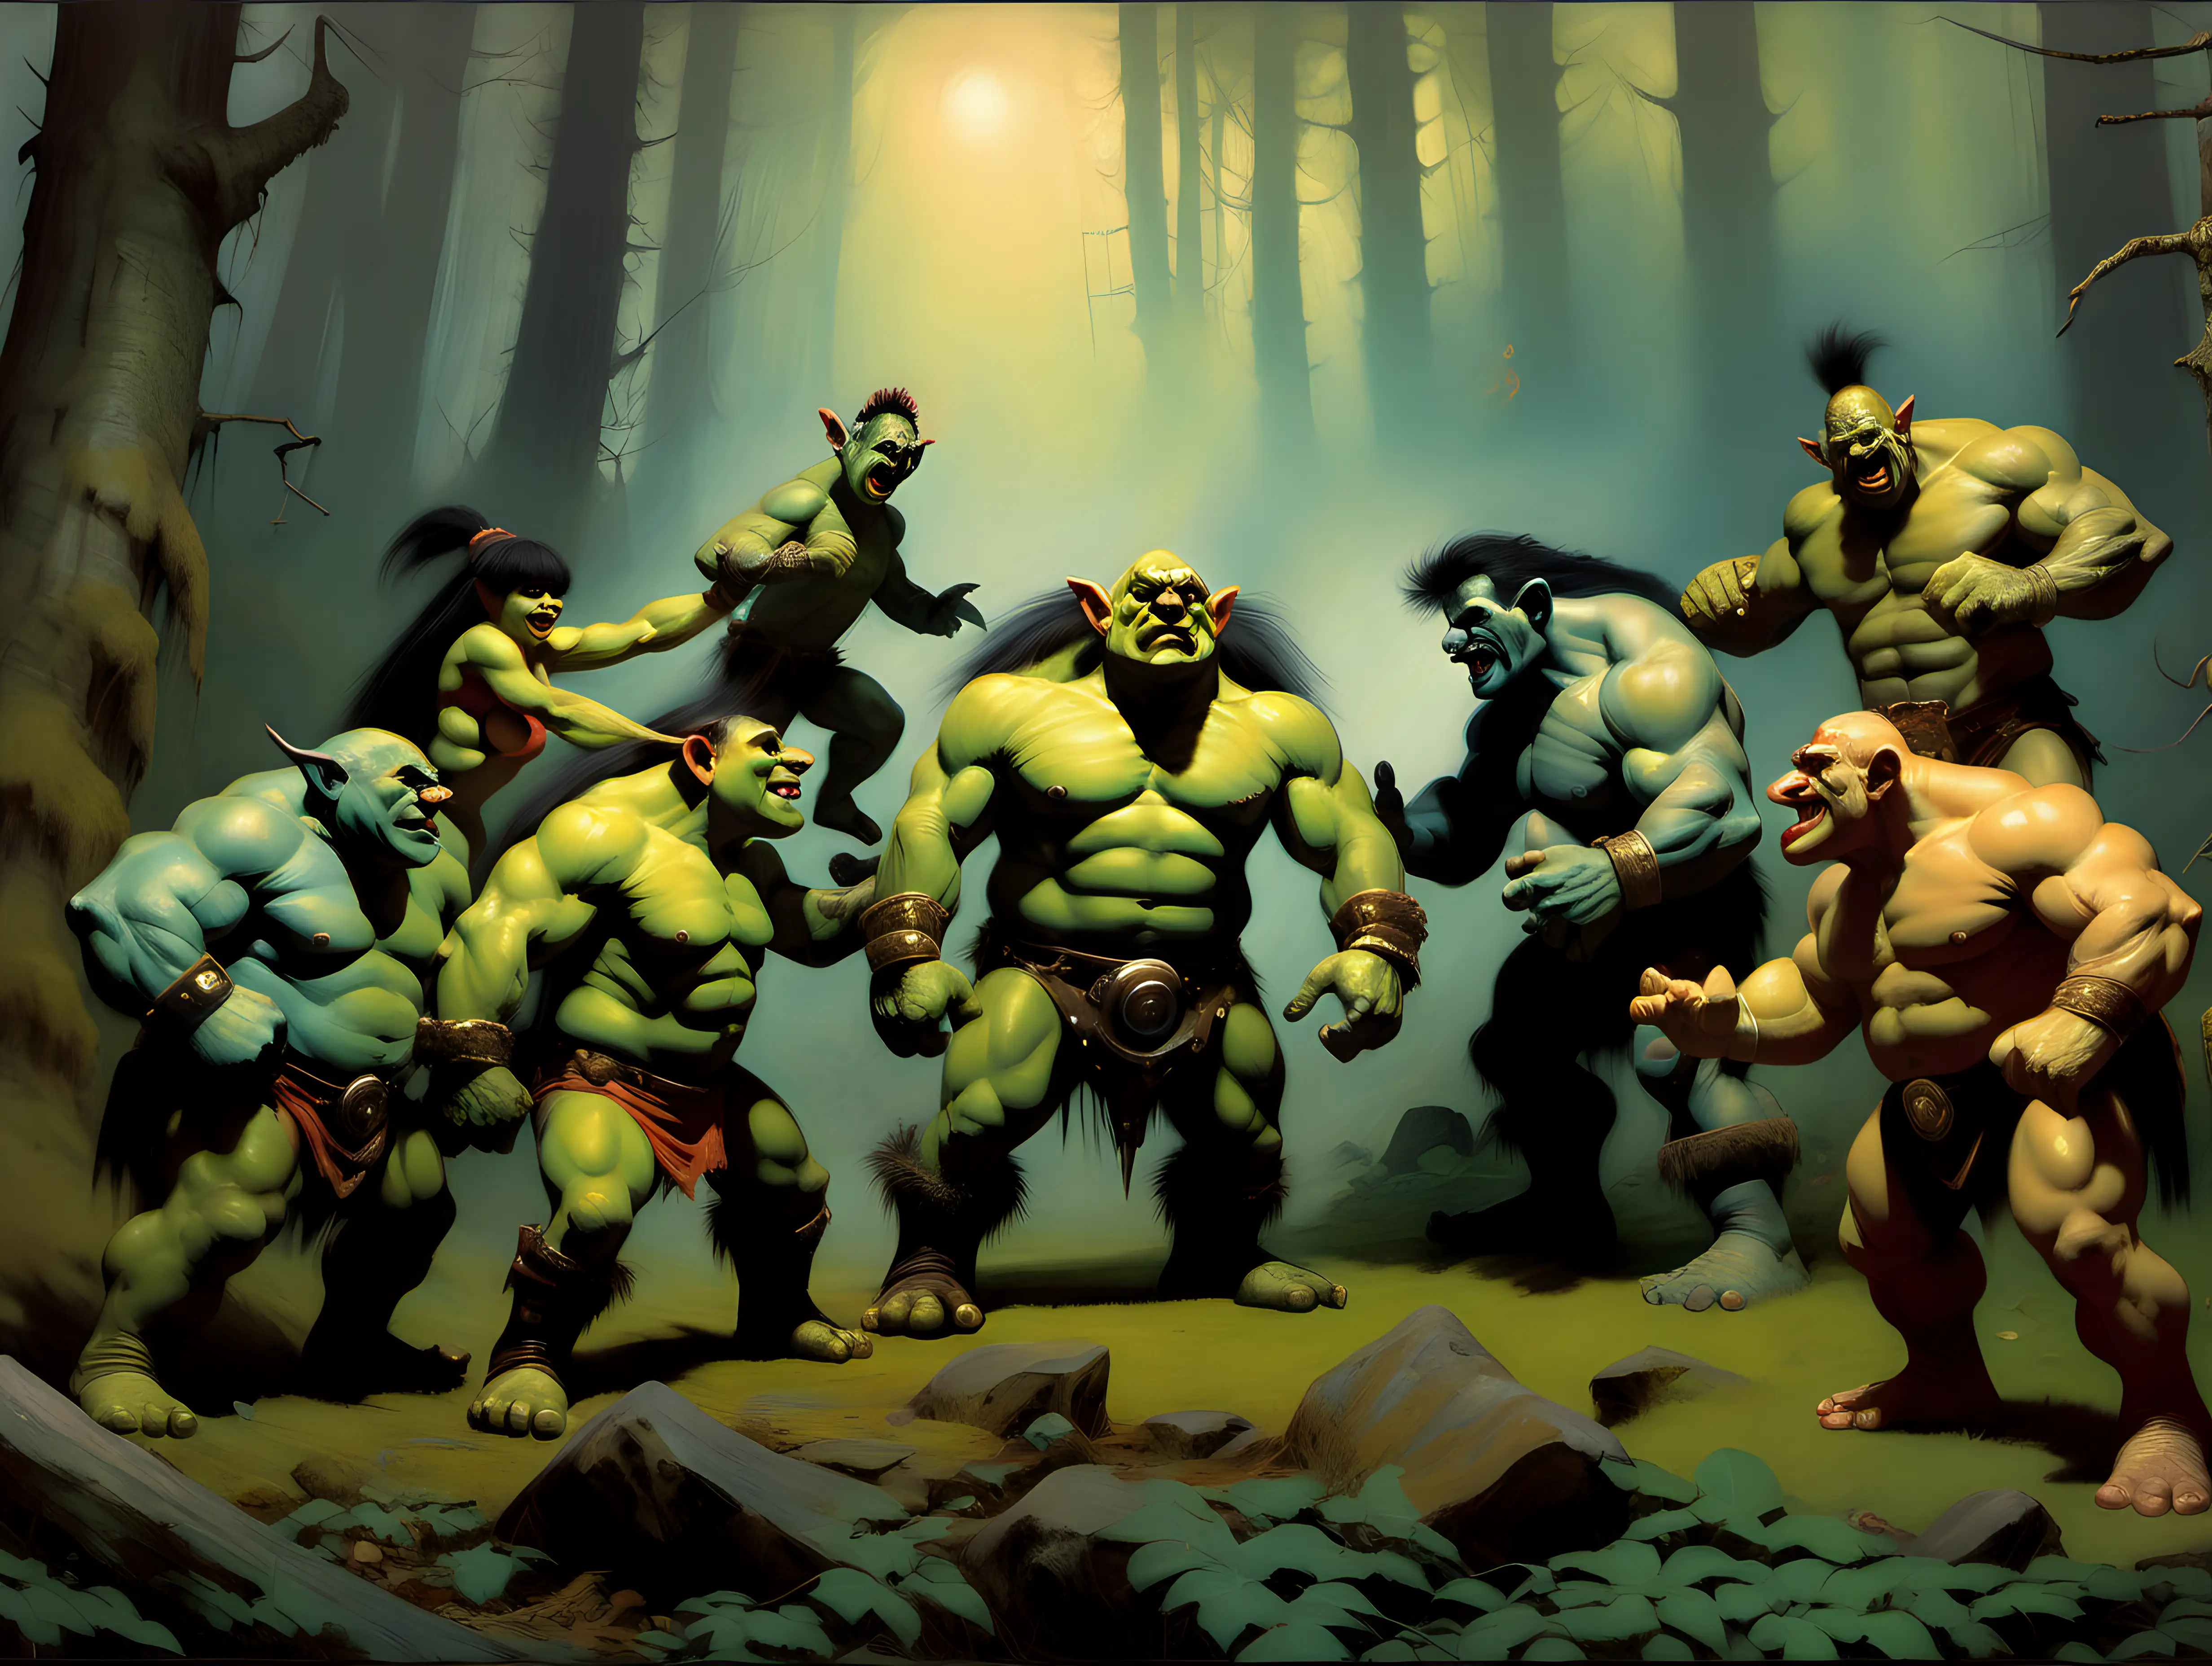 trolls, ogres, wrestling, enchanted forest, Frank Frazetta style